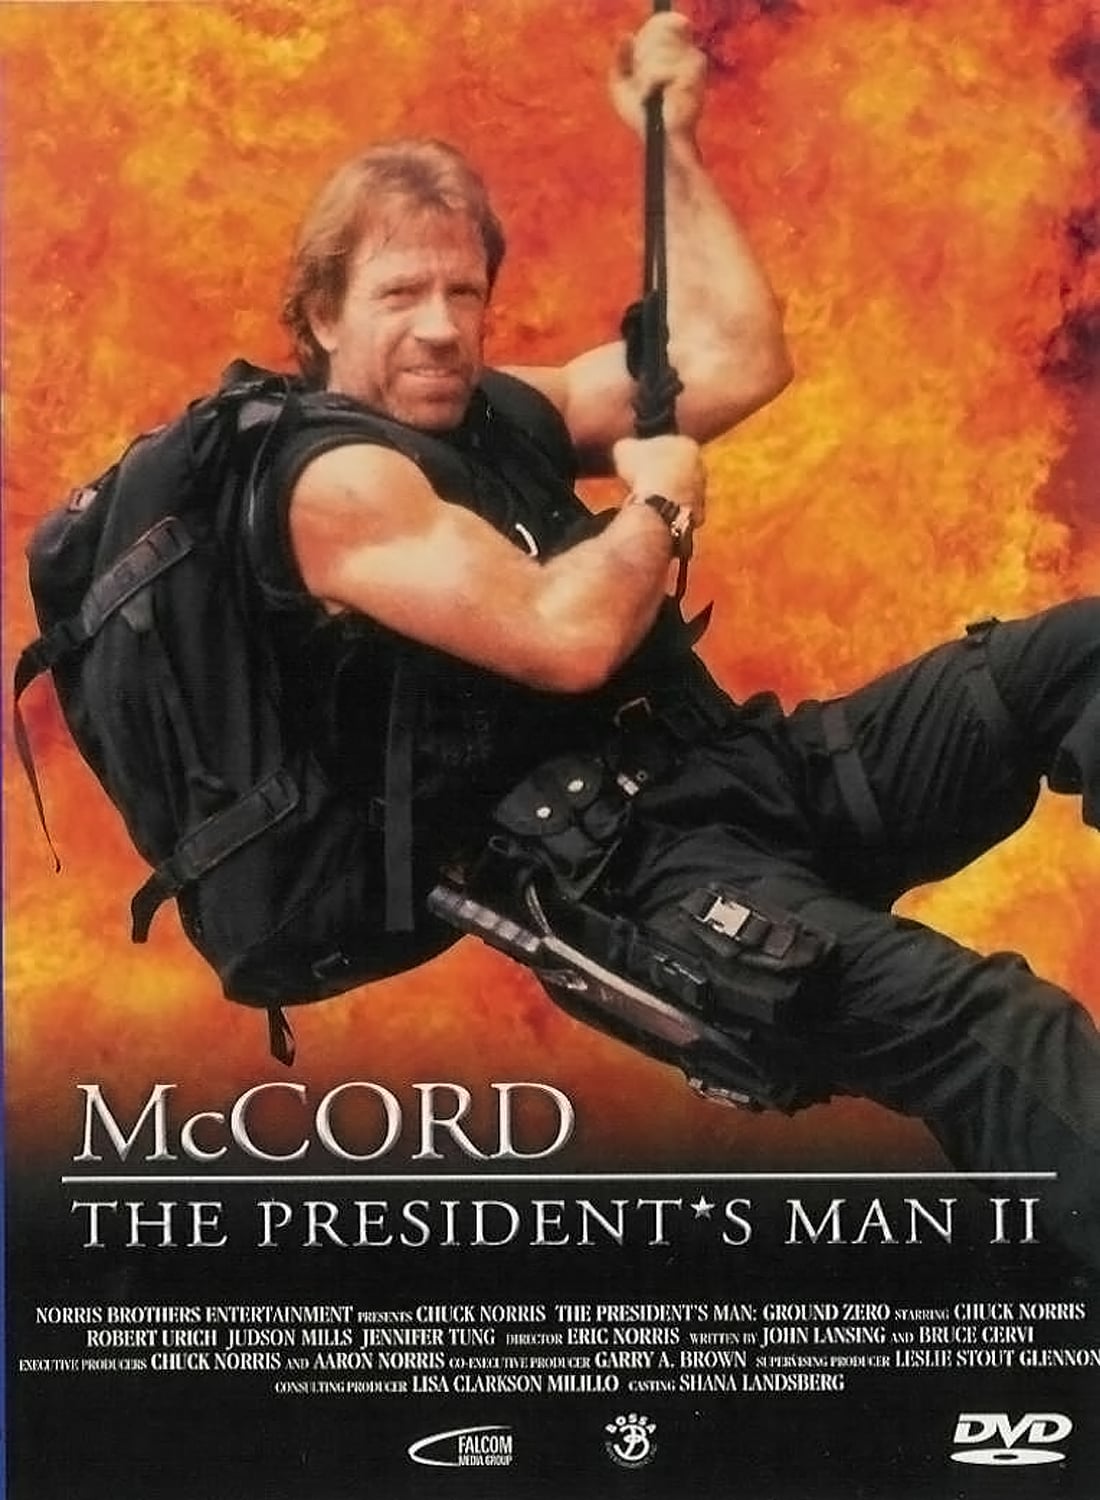 Plakat von "McCord - The President's Man II"